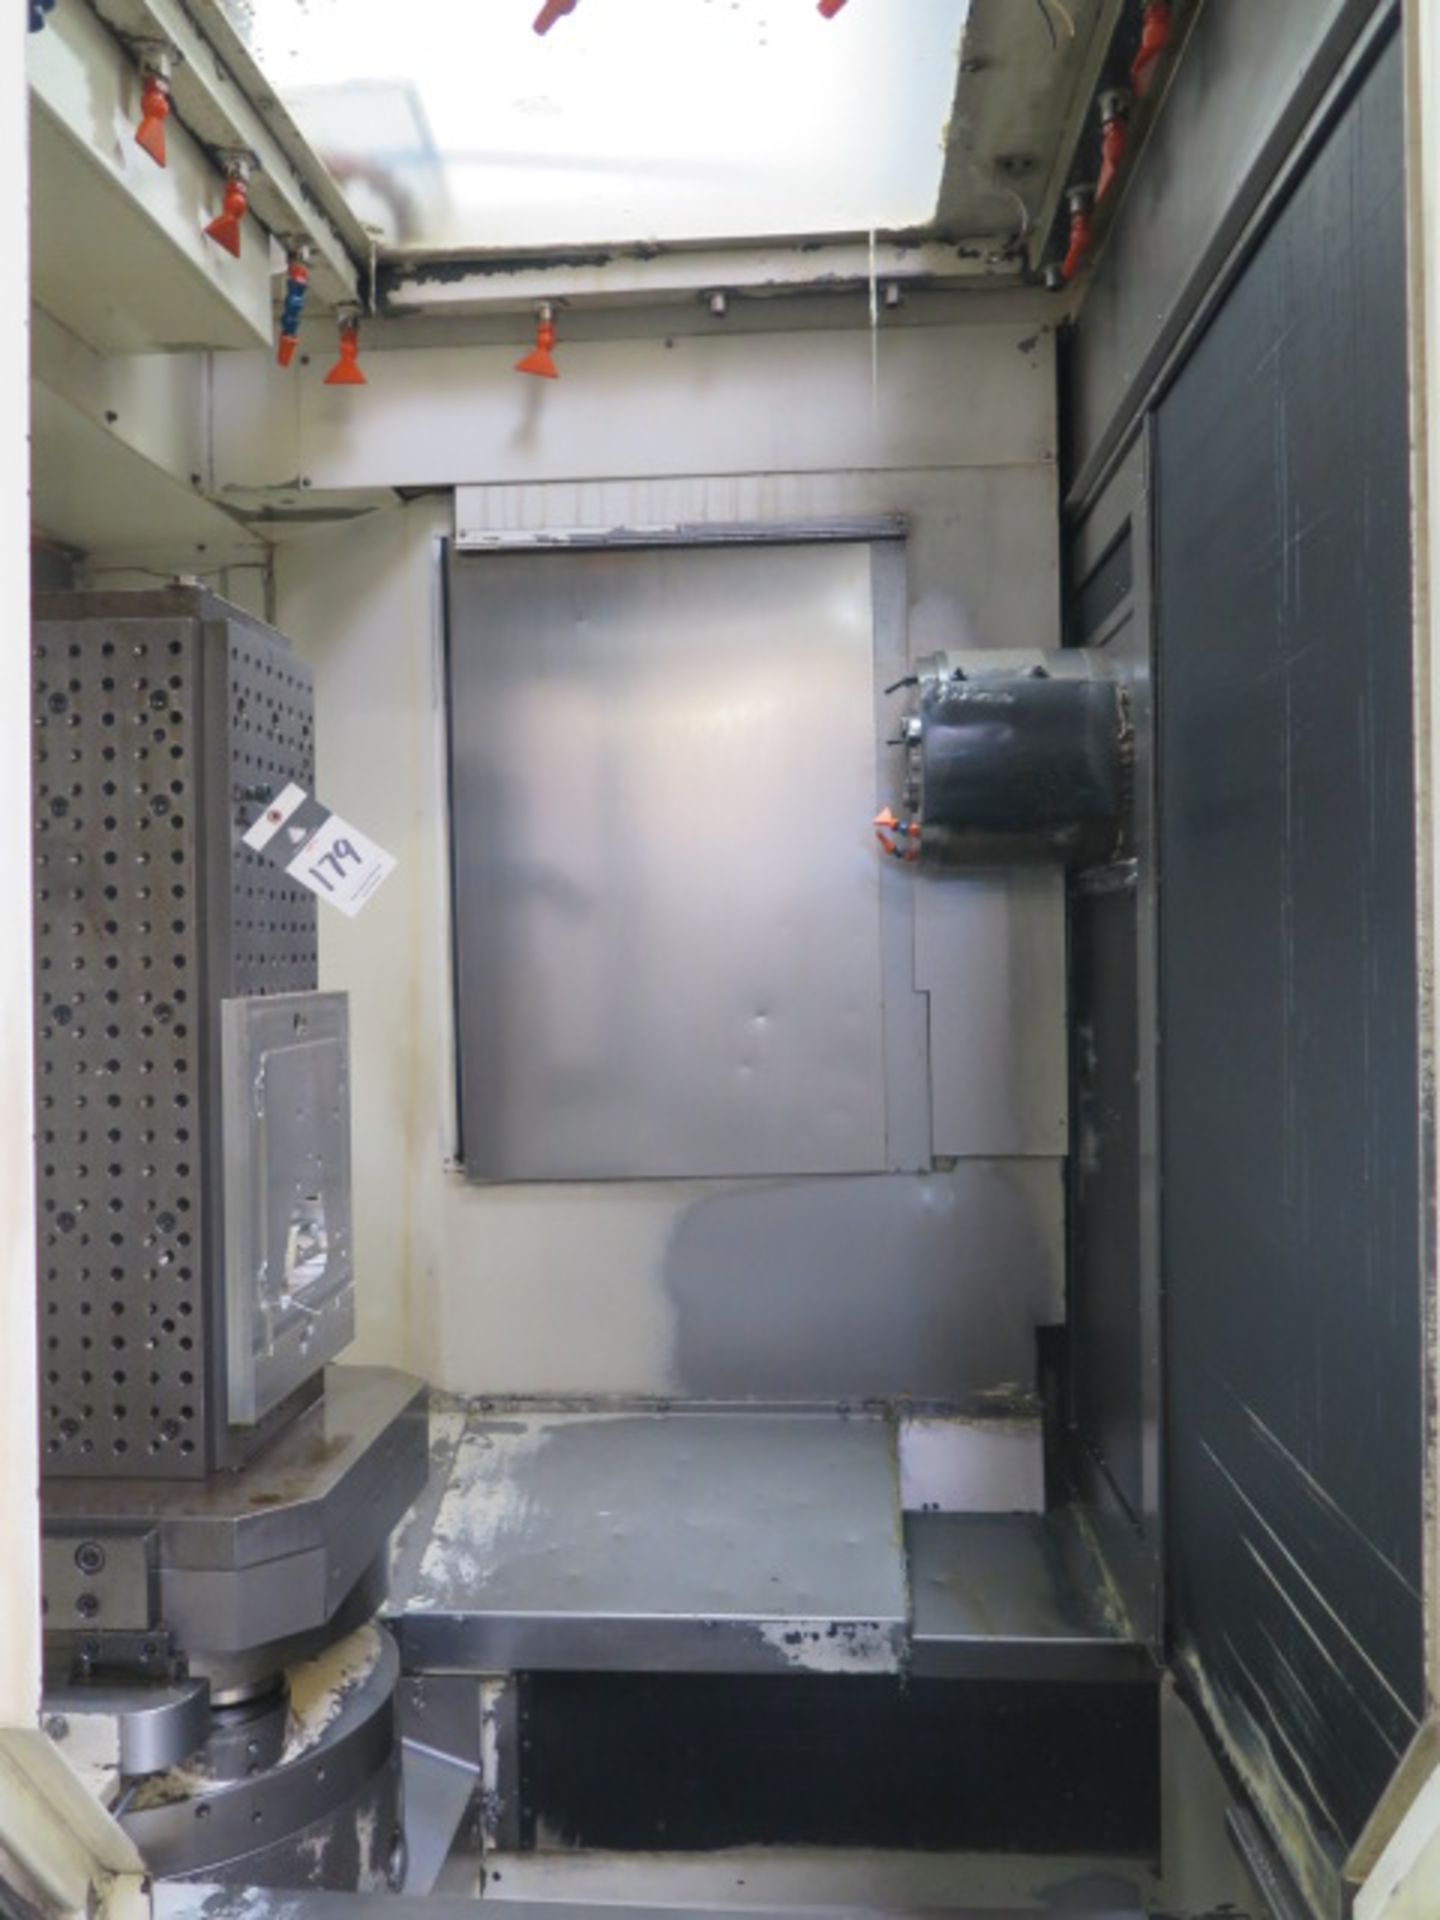 Kitamura Mycenter-HX500i 2-Pallet 4-Axis CNC Horizontal Machining Center s/n 43188 w/ Fanuc Series - Image 7 of 17